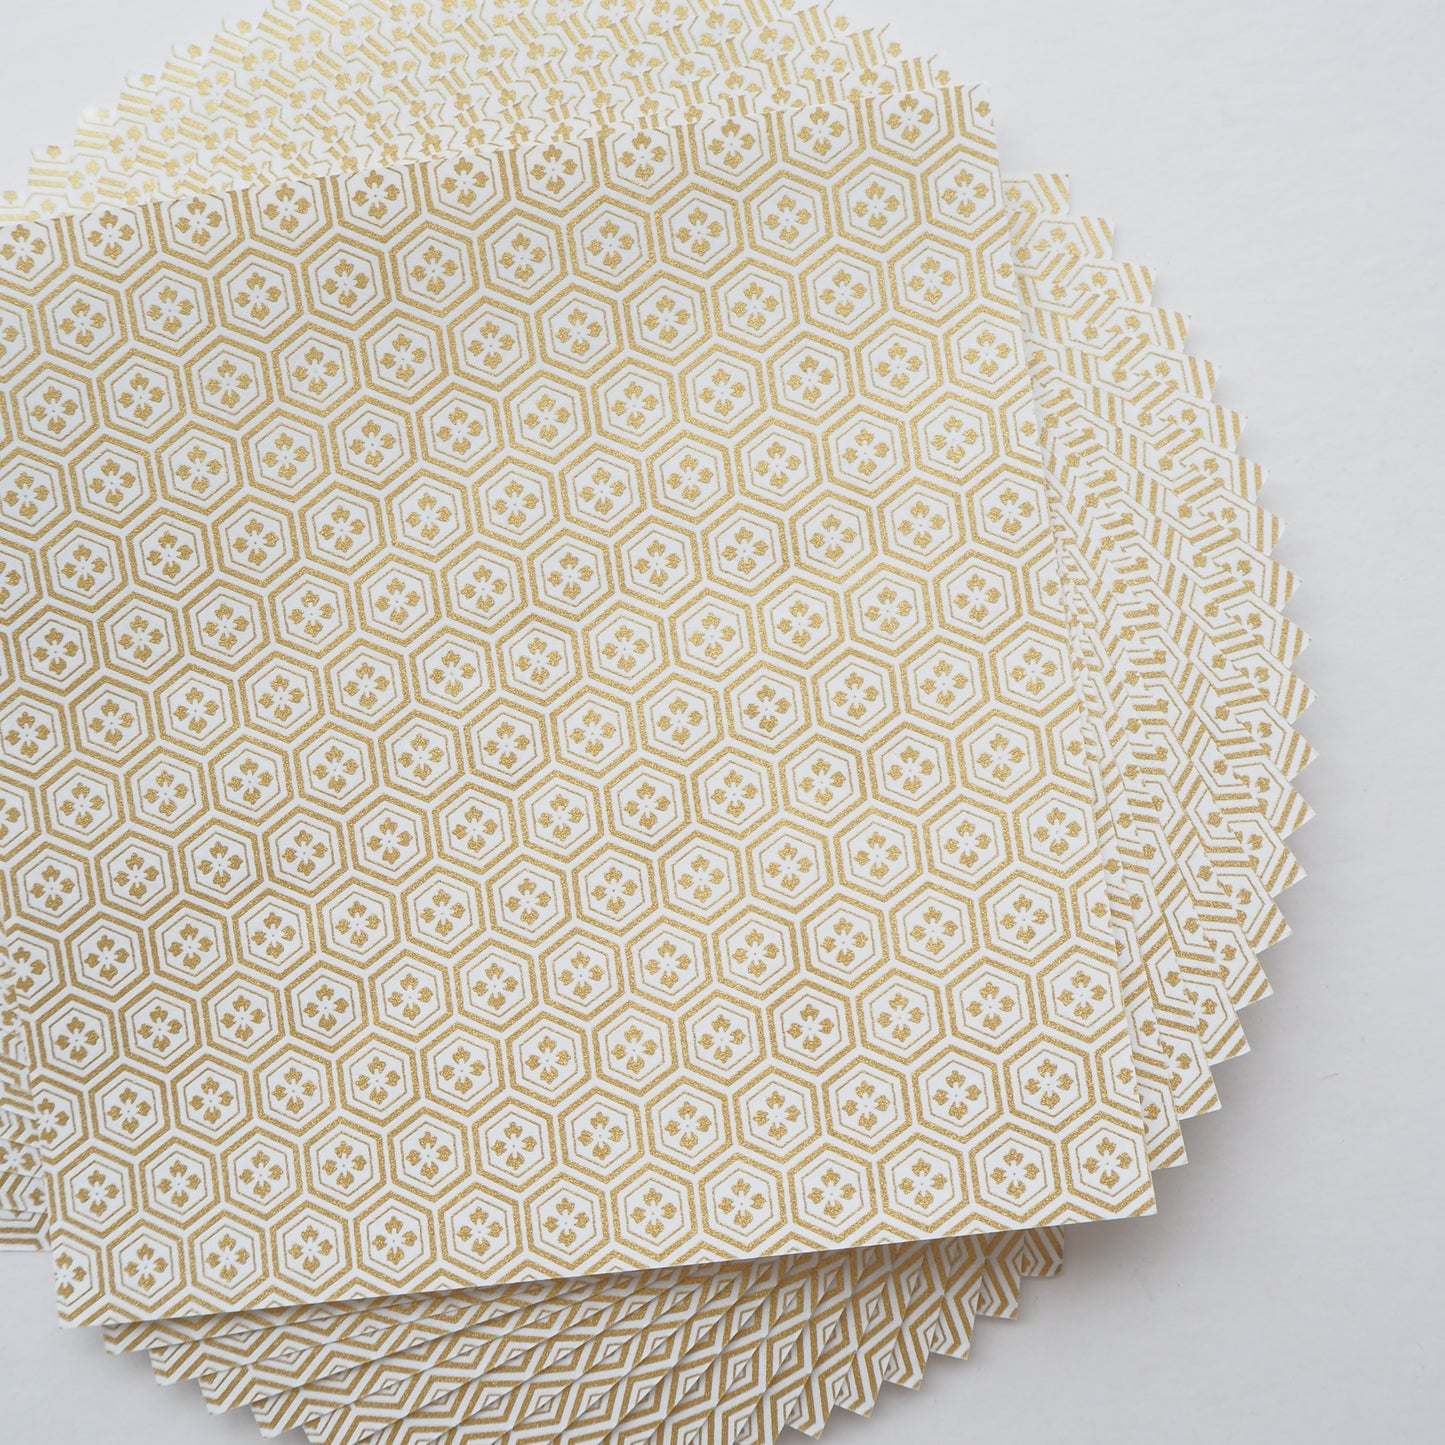 Pack of 20 Sheets 14x14cm Yuzen Washi Origami Paper HZ-375 - White Gold Tortoiseshell Diamond Flower